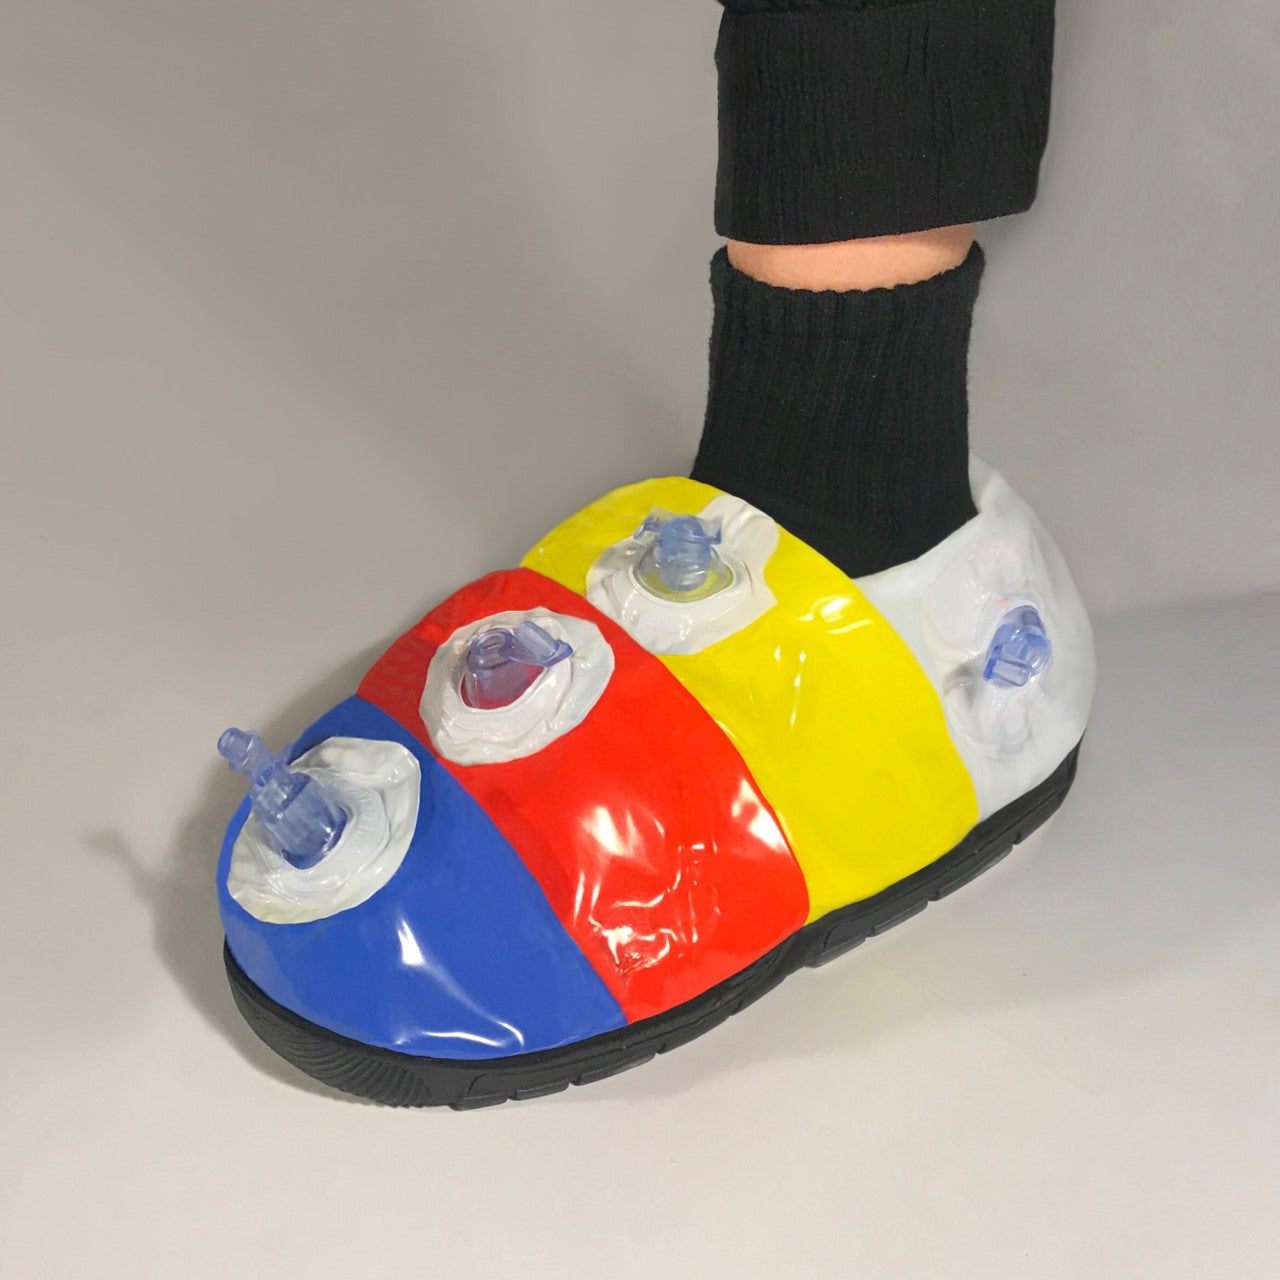 Upcycled Ball Shoe